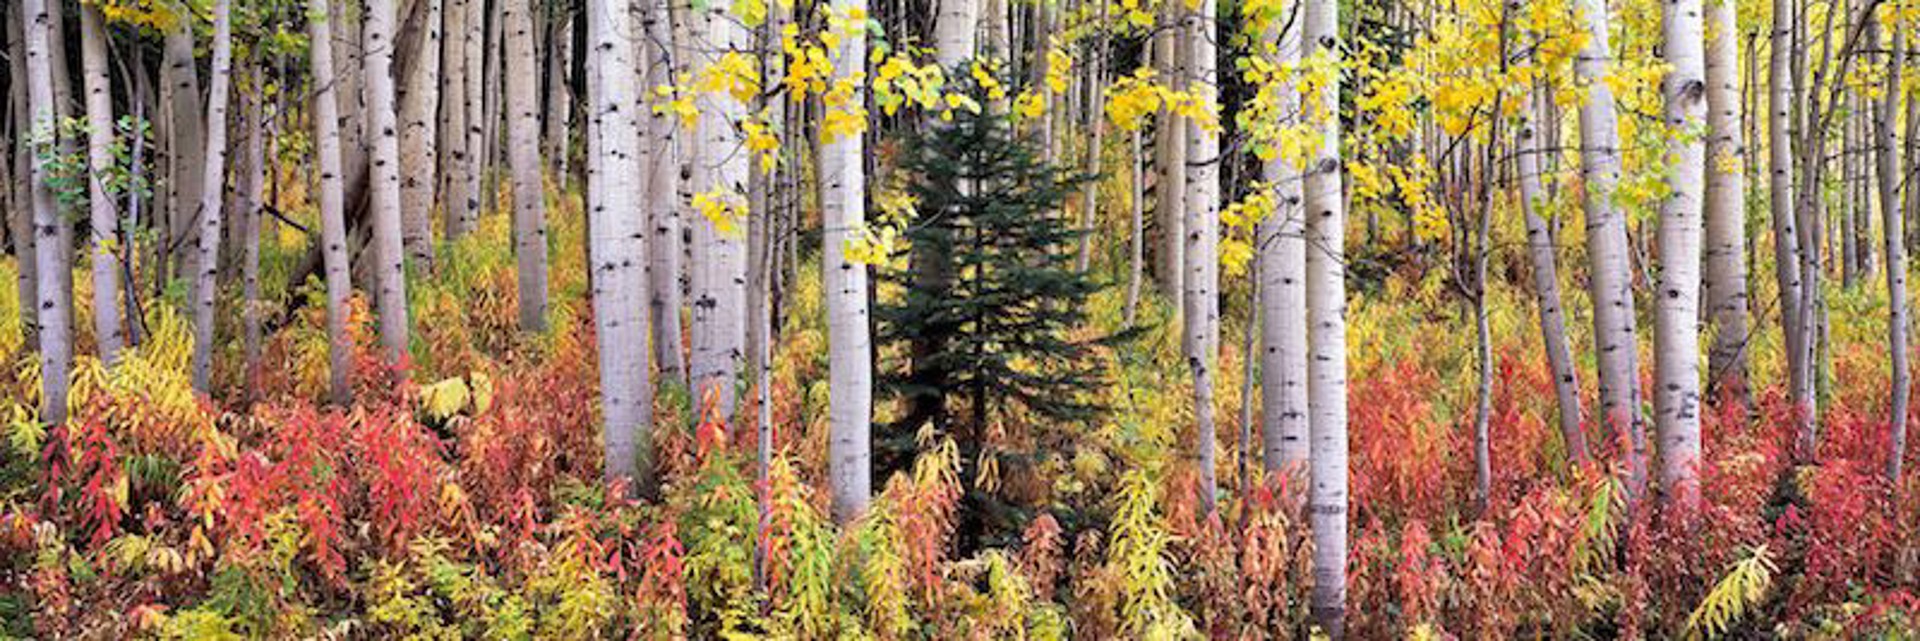 Autumn Fireweed and Aspens by Steven Friedman